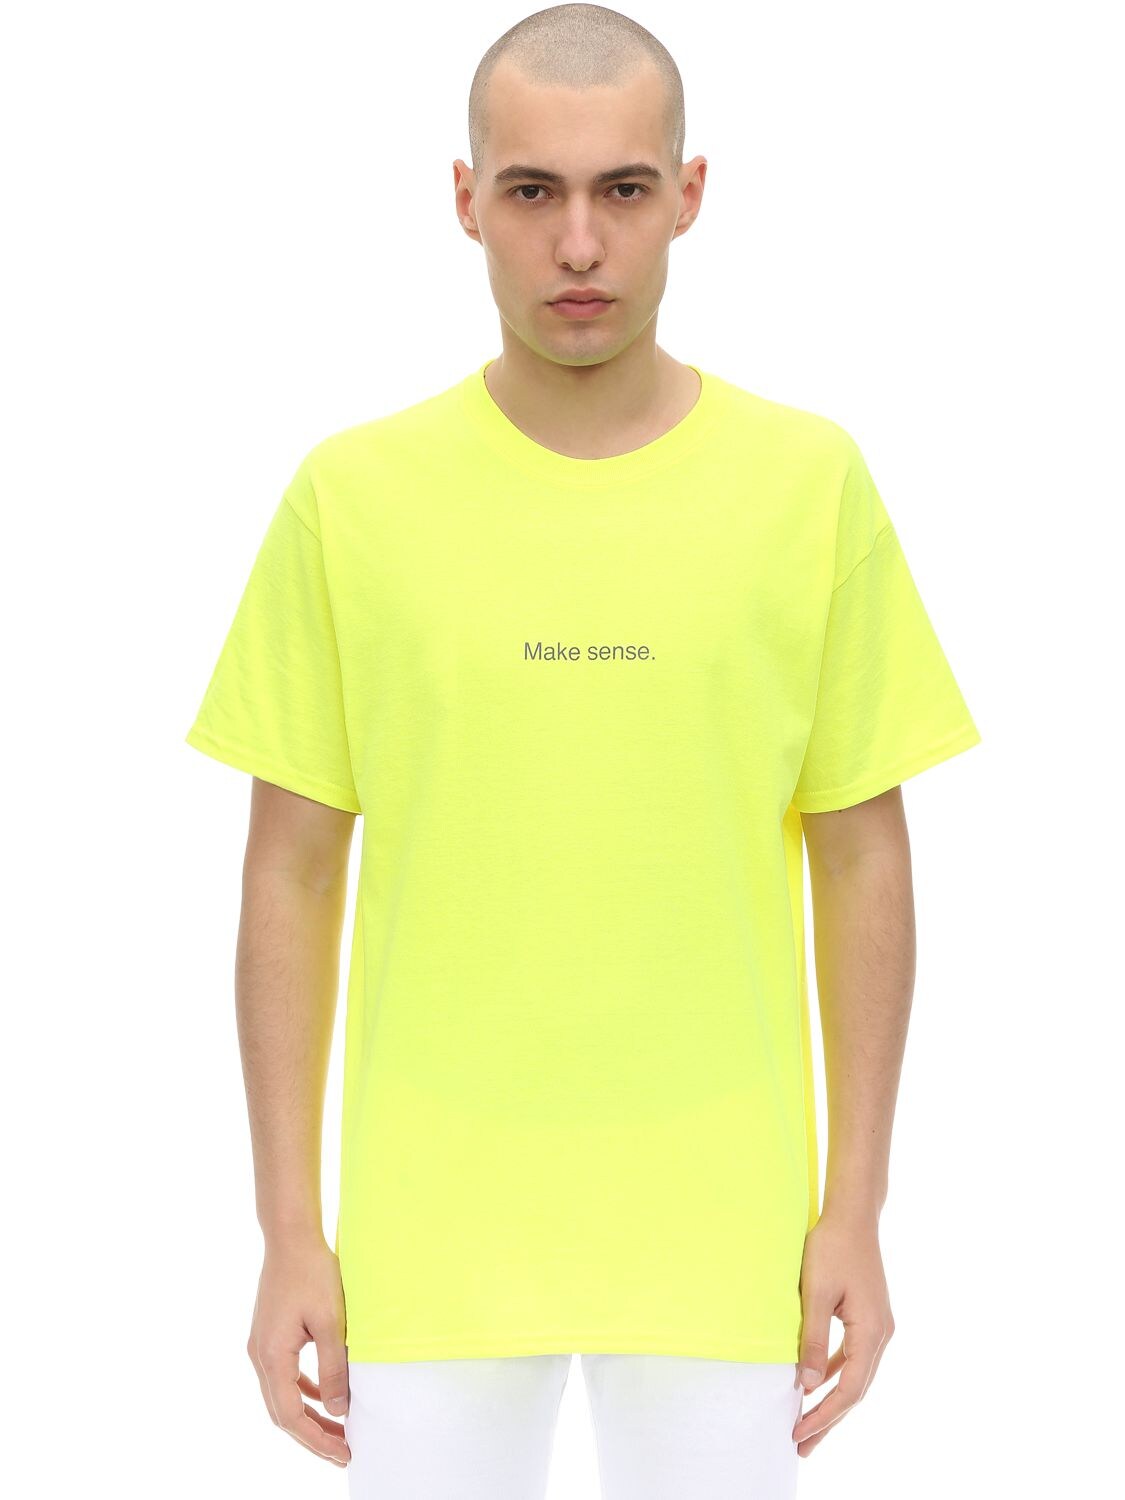 Famt - Fuck Art Make Tees Make Sense Cotton Jersey T-shirt In Neon Yellow